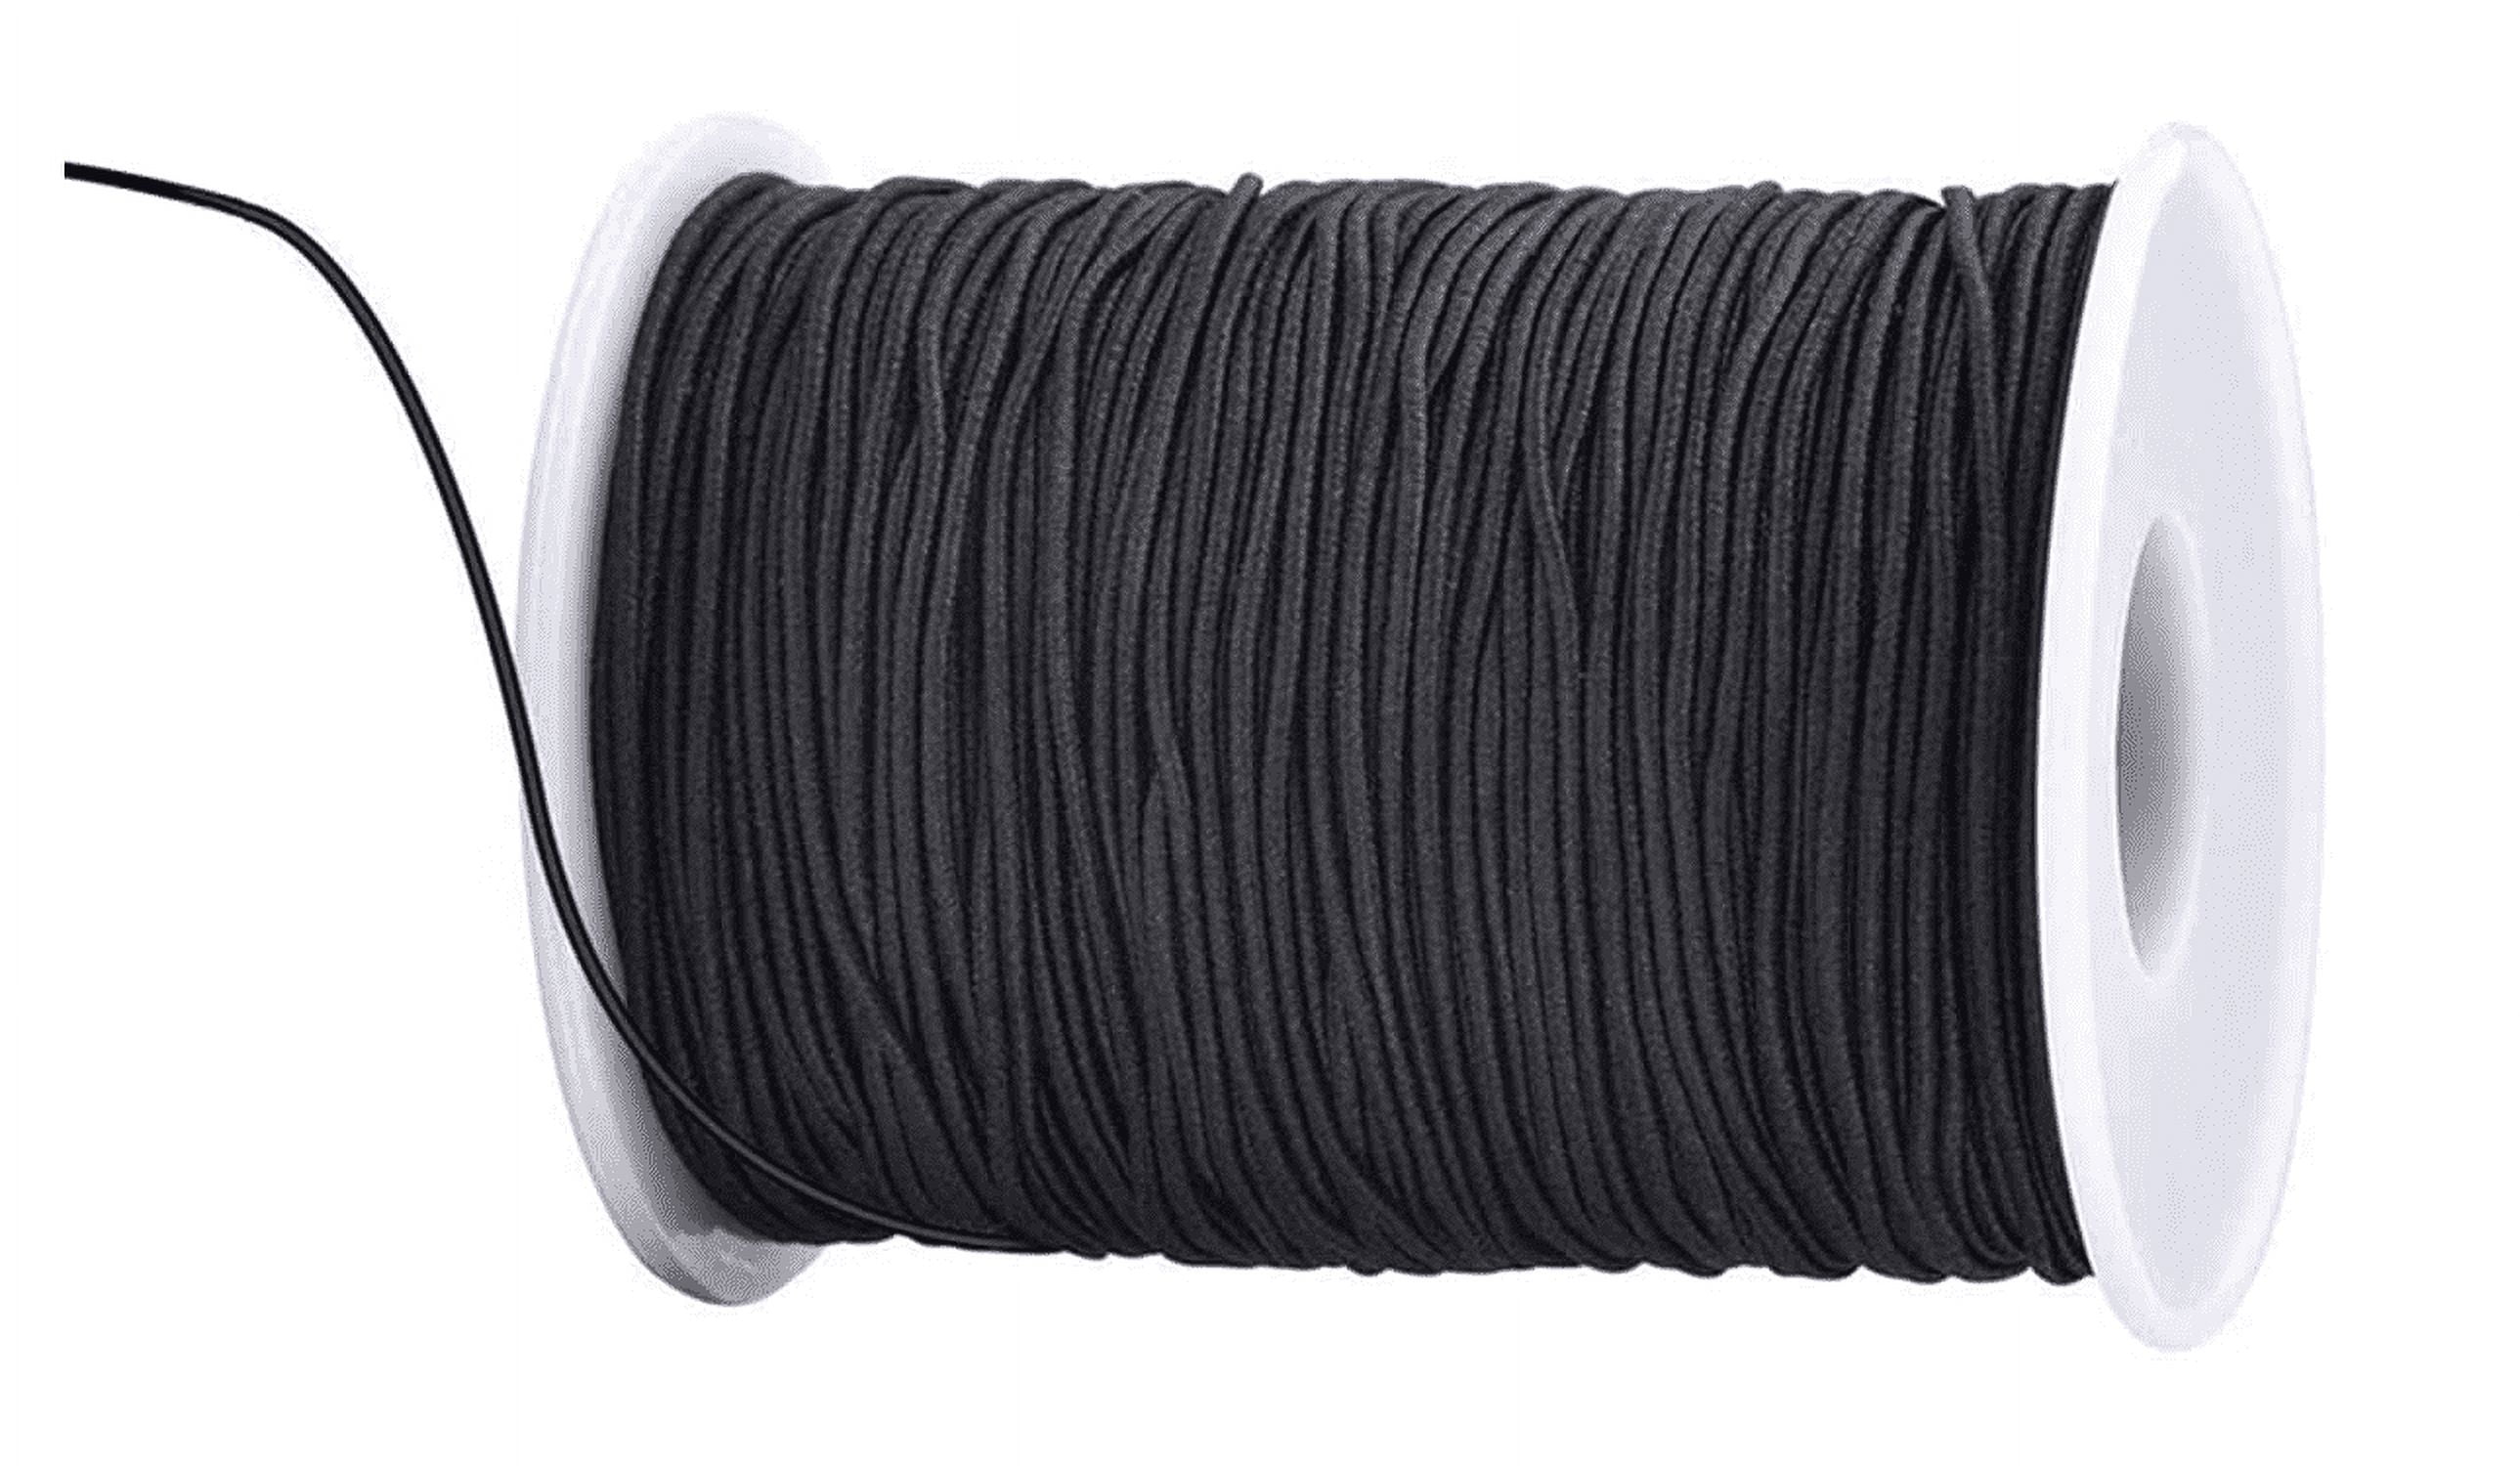 1MM Stretch-Tastic Cotton Elastic Cord, Black (100 Meters)